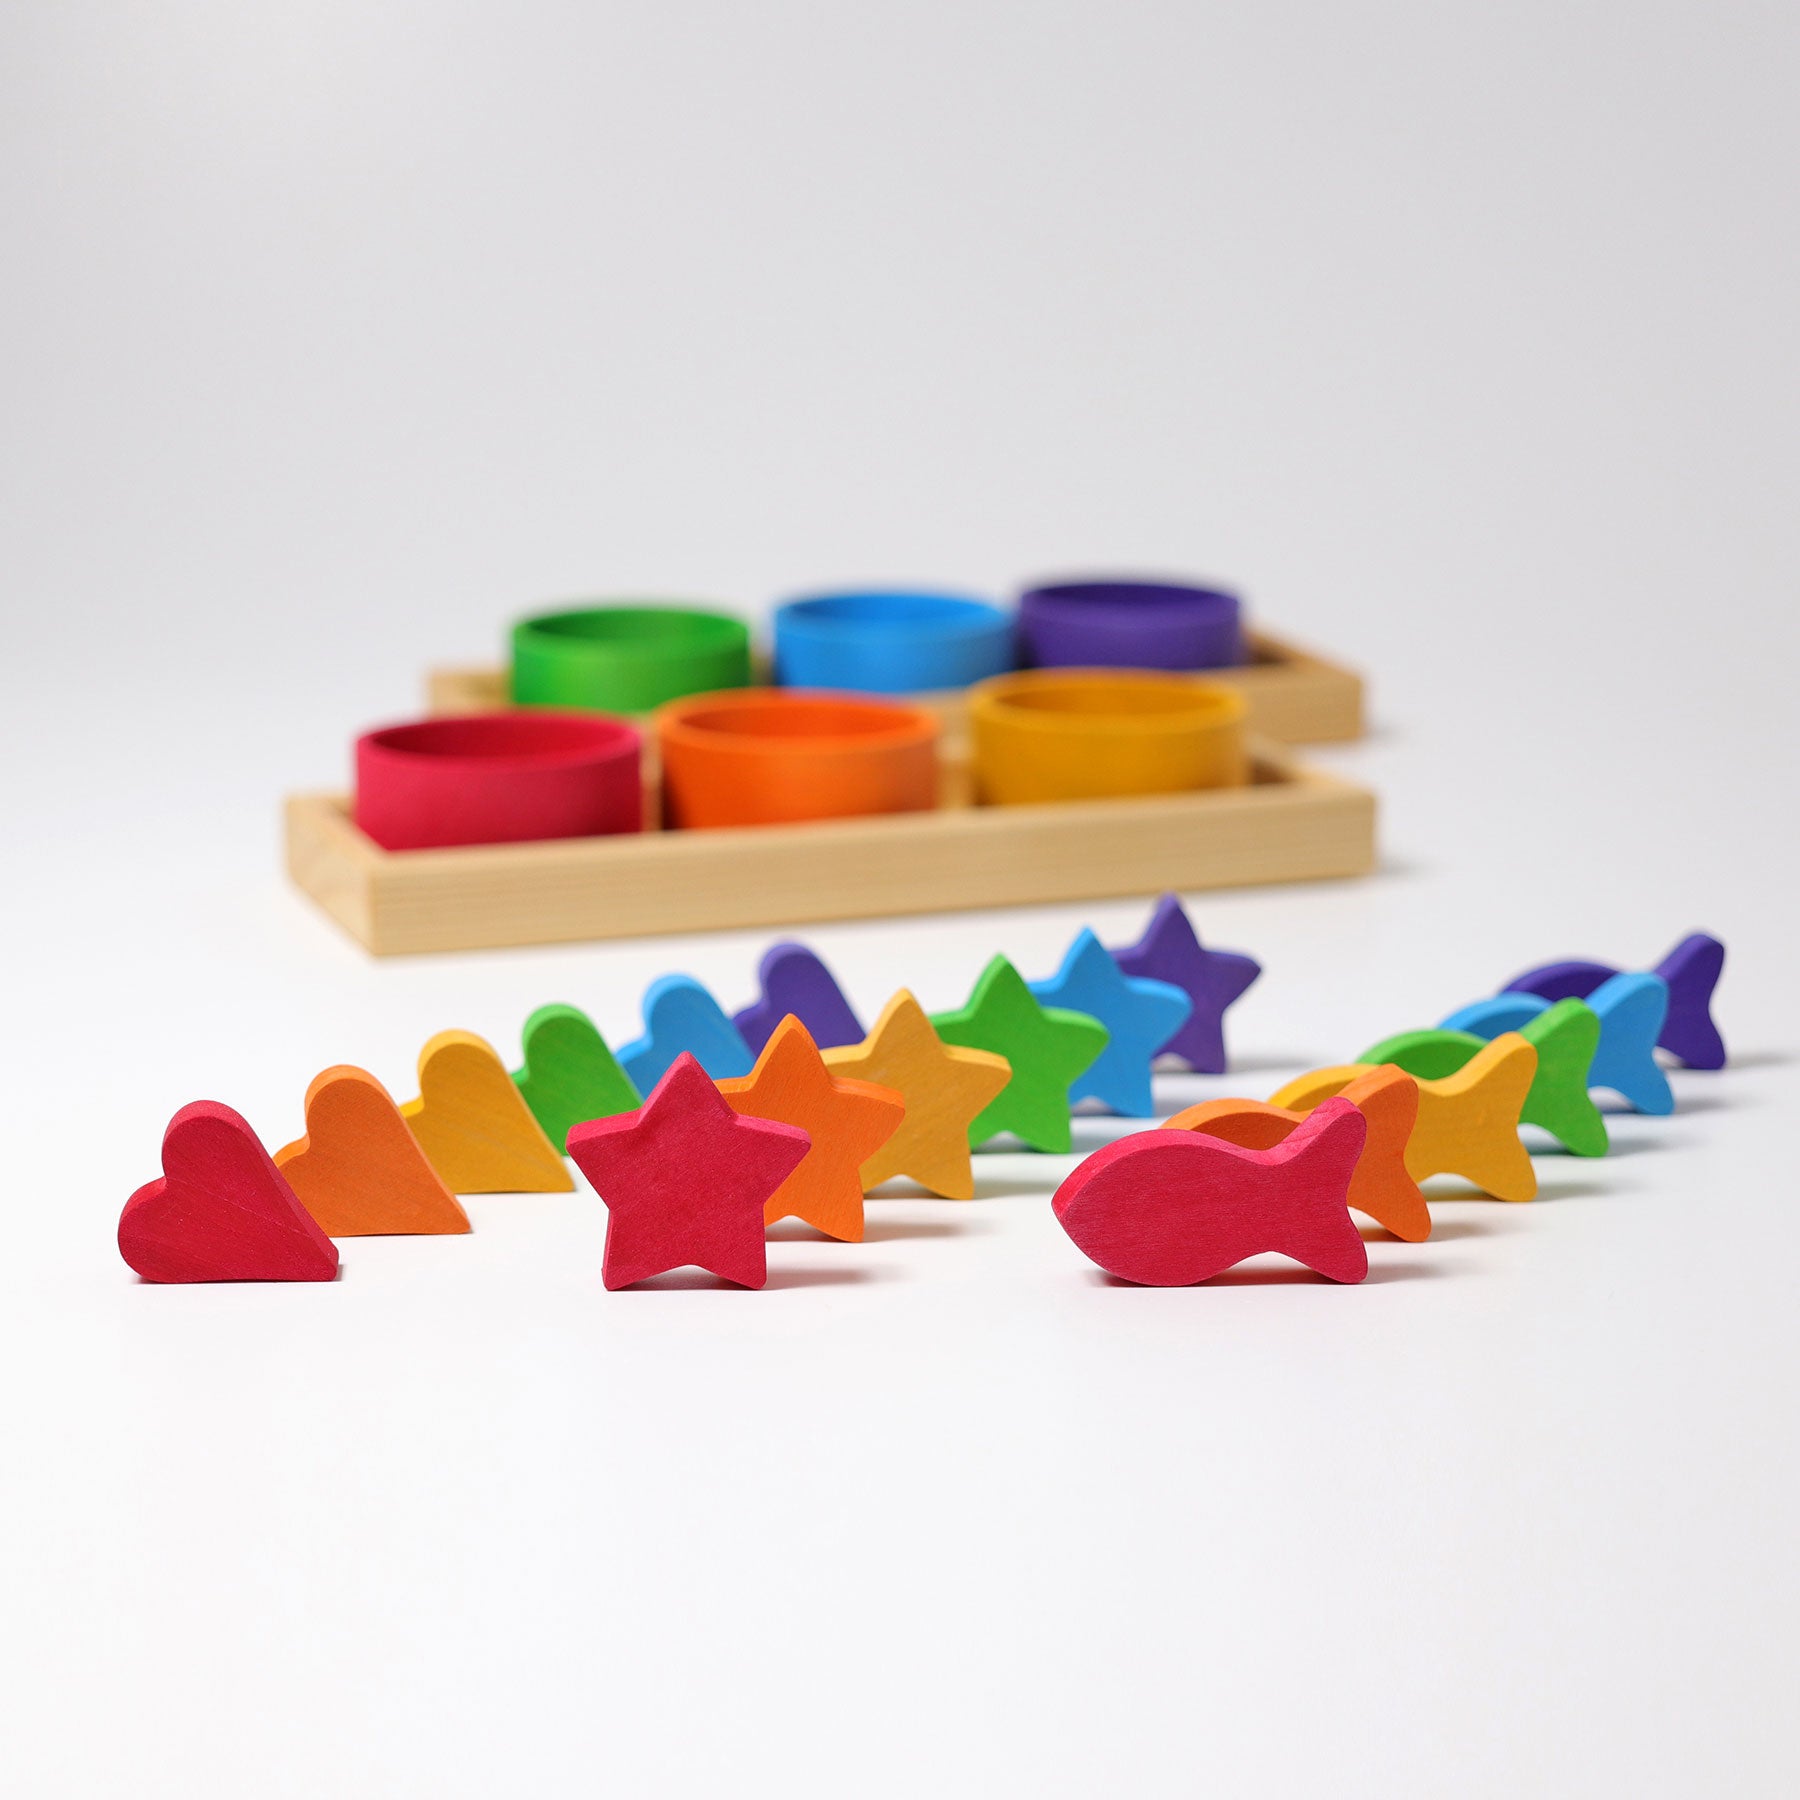 Rainbow shape sorting game